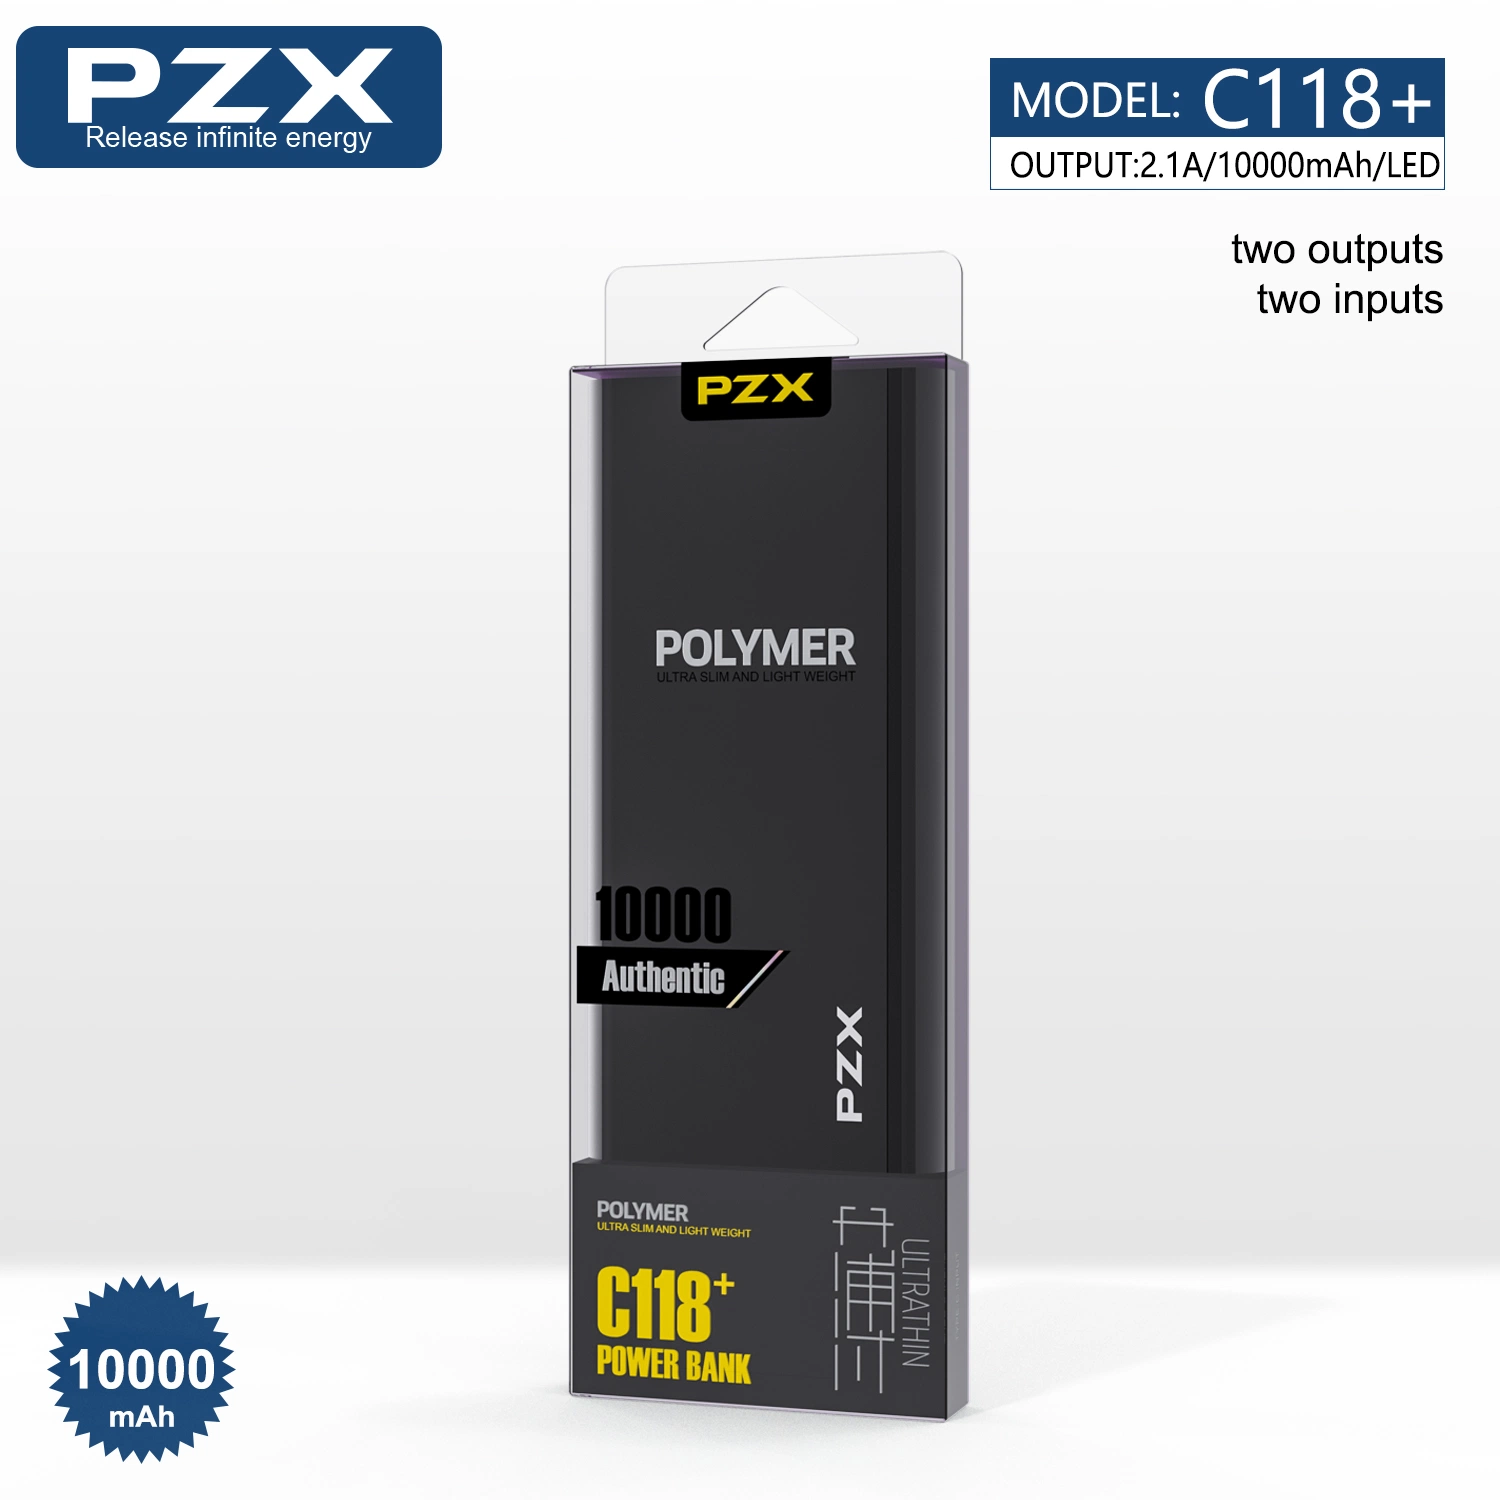 Pzx Akku 10000mAh Handy laden Portable Power Bnak